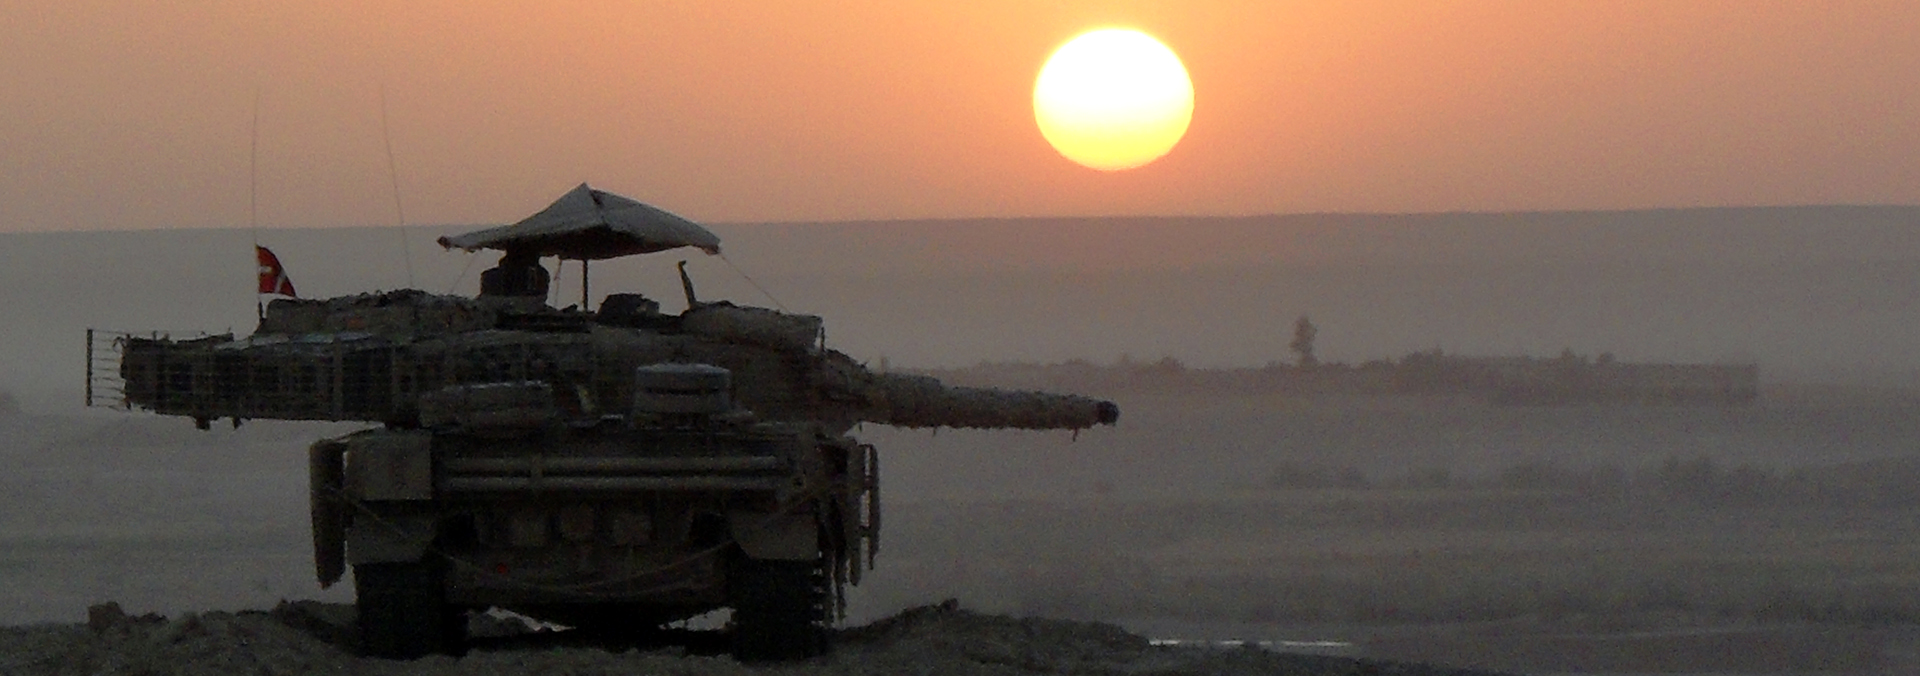 Dansk kampvogn i Afghanistan  ved solnedgang